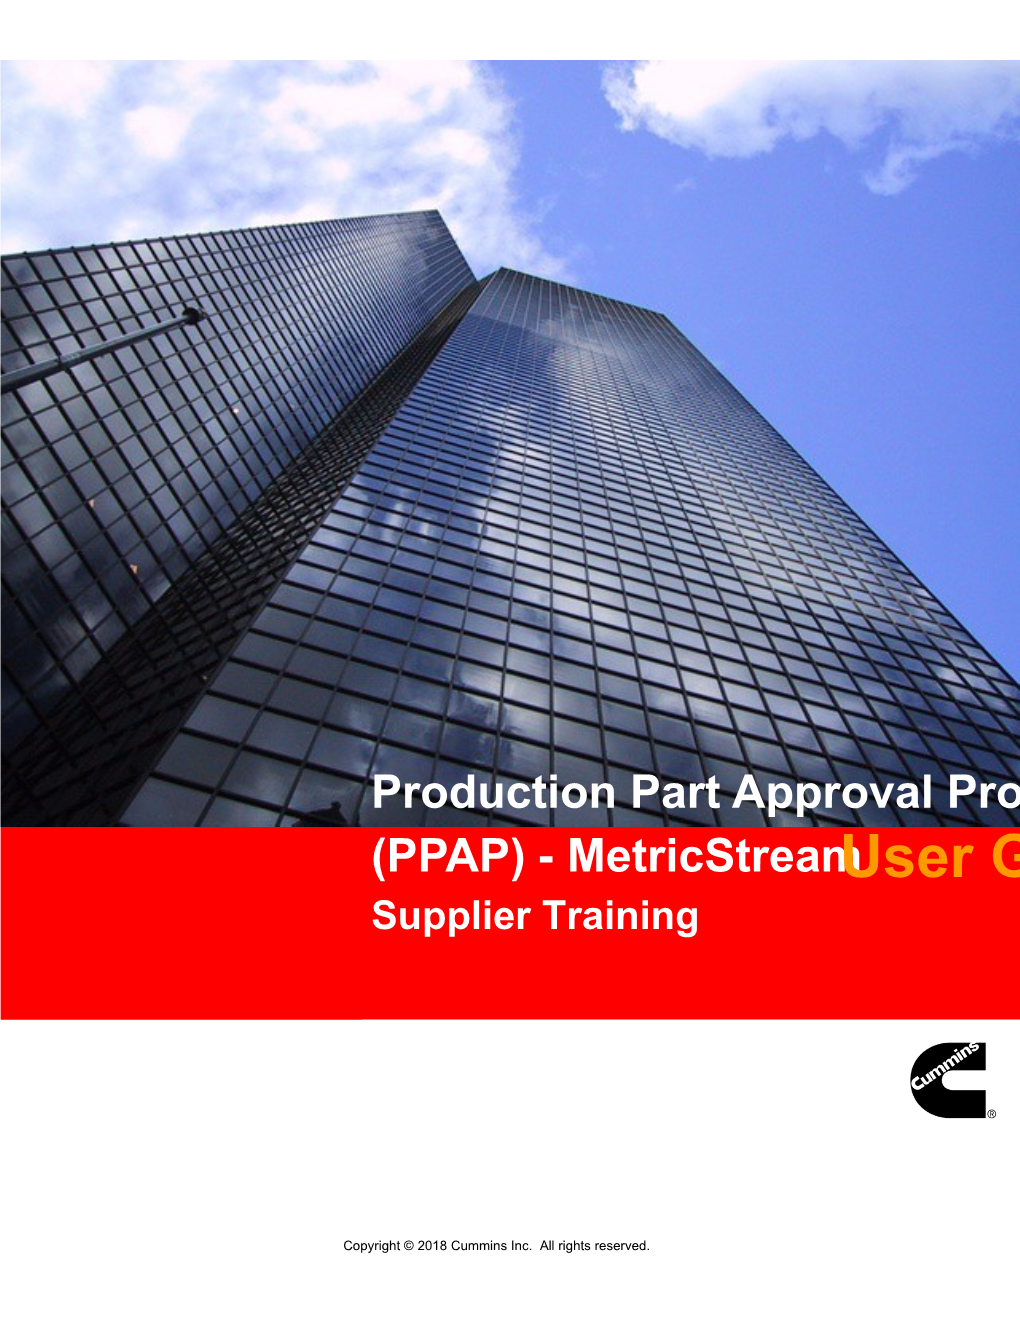 PPAP-Metricstream Supplier Training